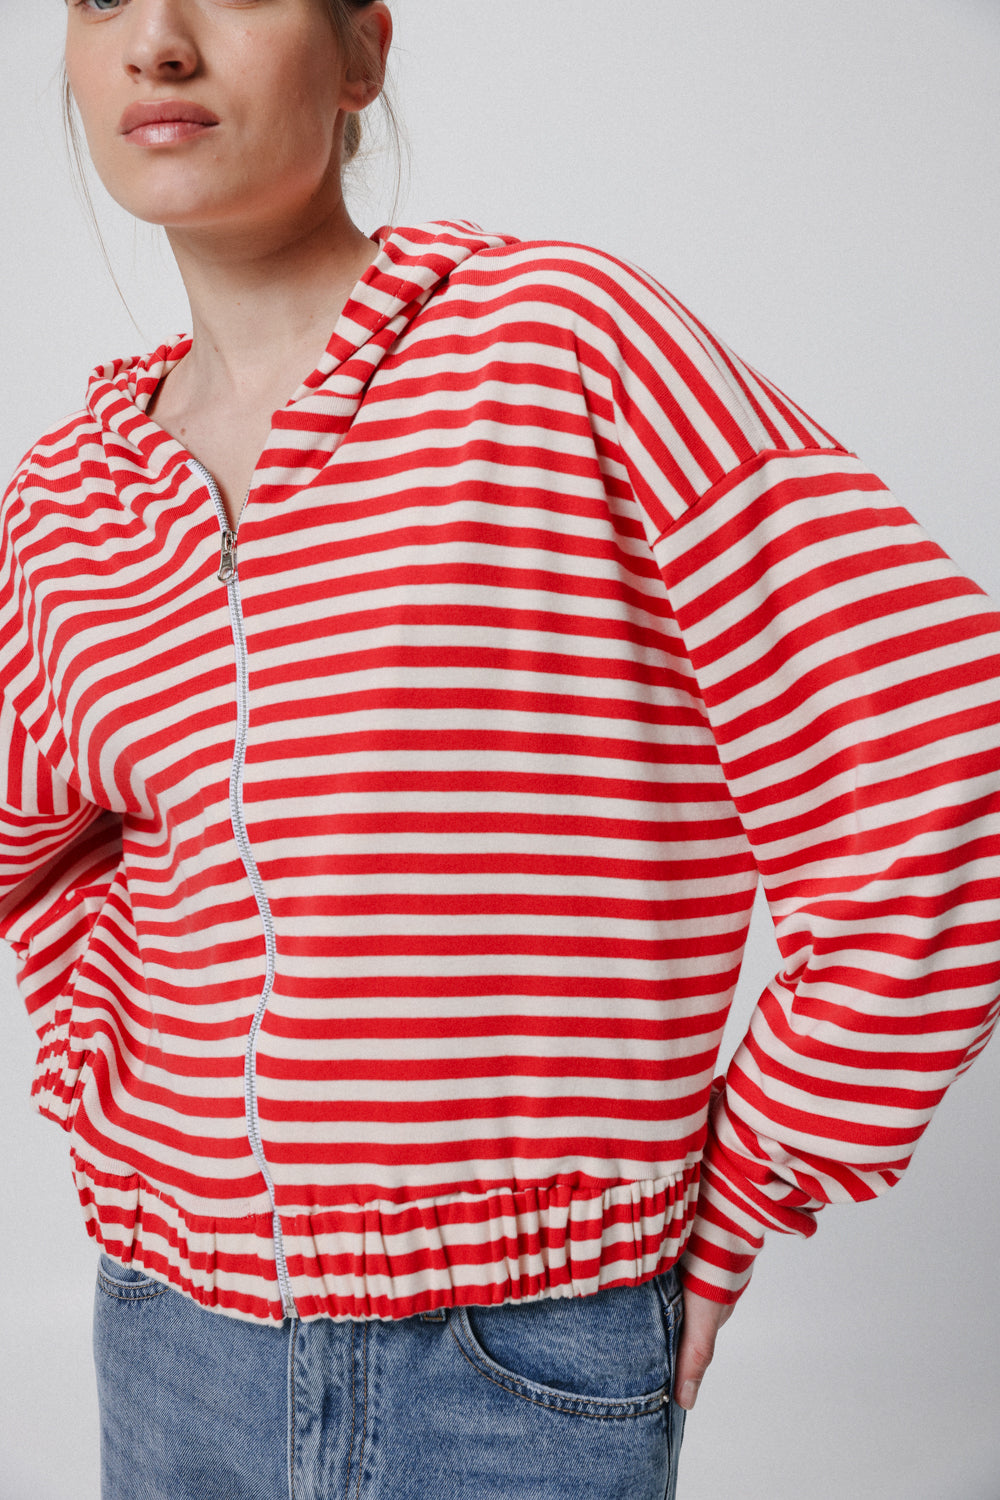 Soda Red Stripes Sweatshirt